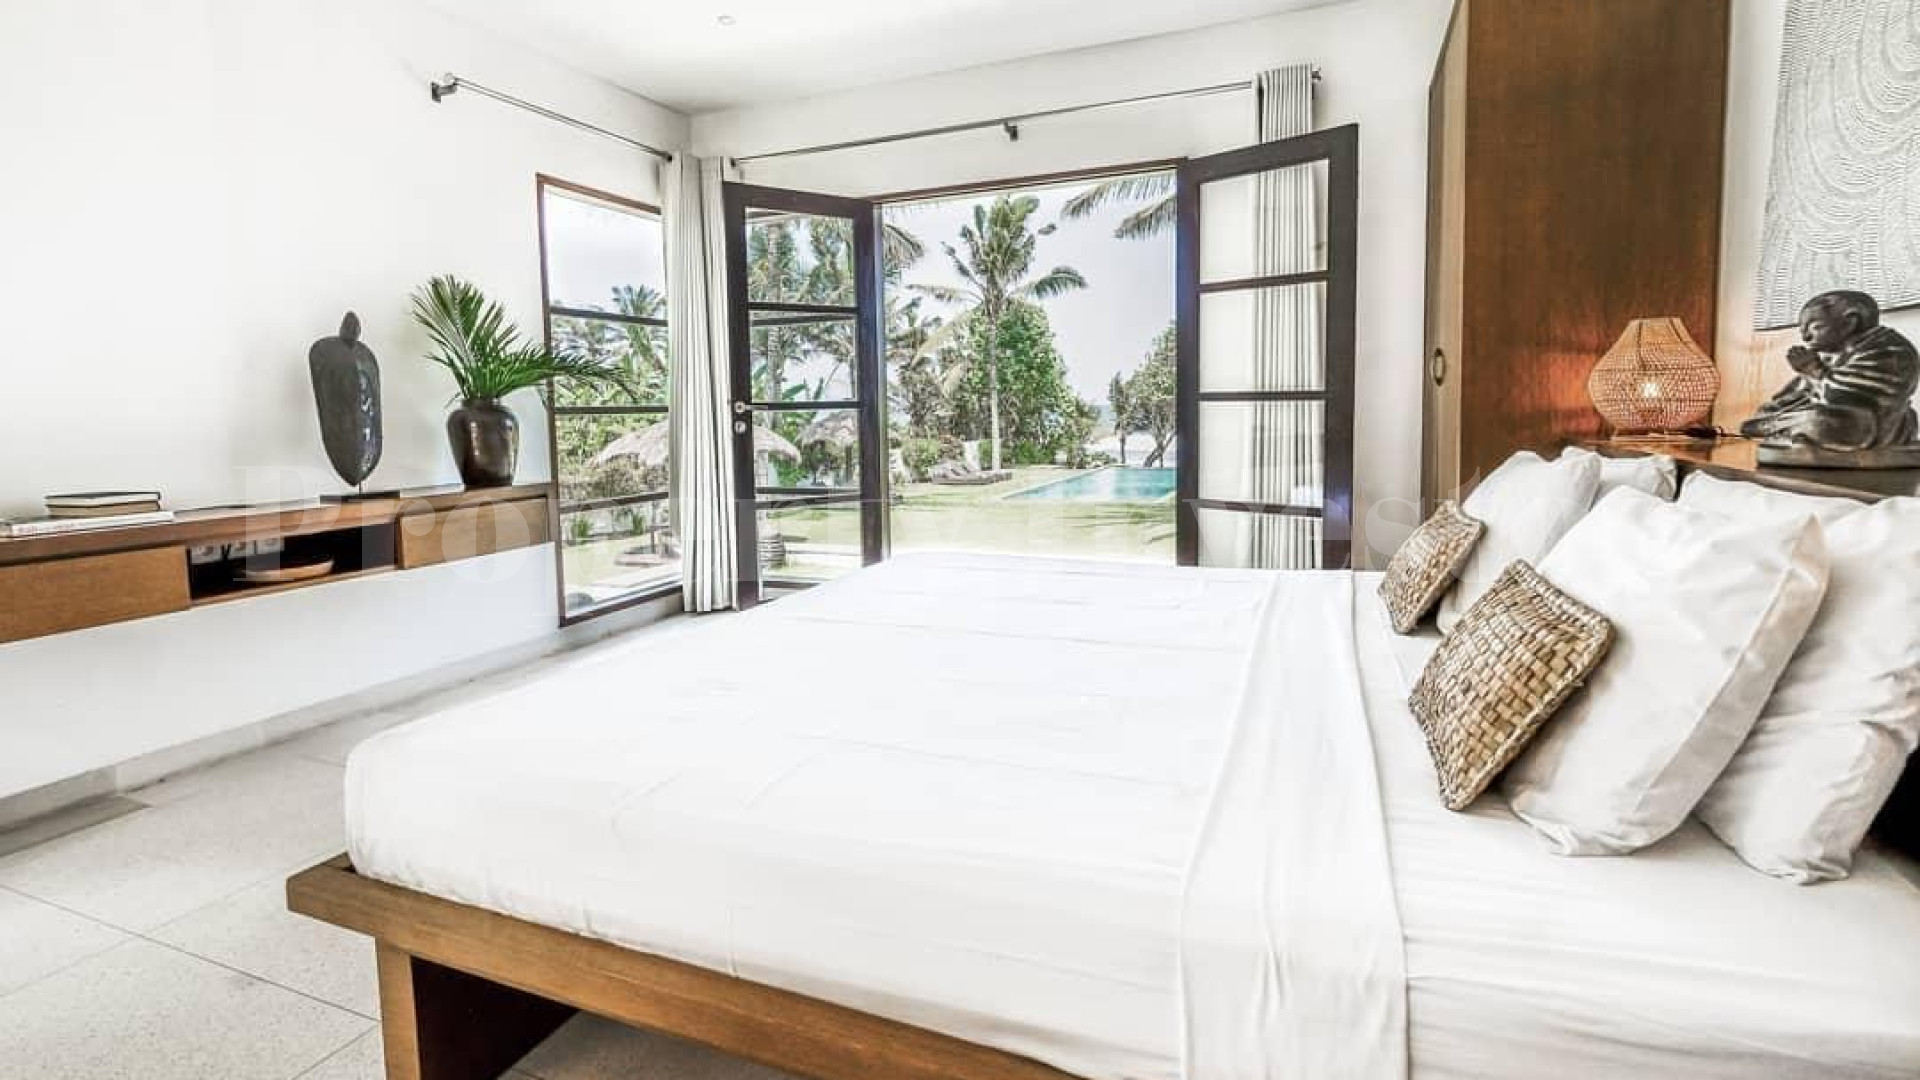 Spectacular 5 Bedroom Modern Beachfront Balinese Villa for Sale in Tabanan, Bali